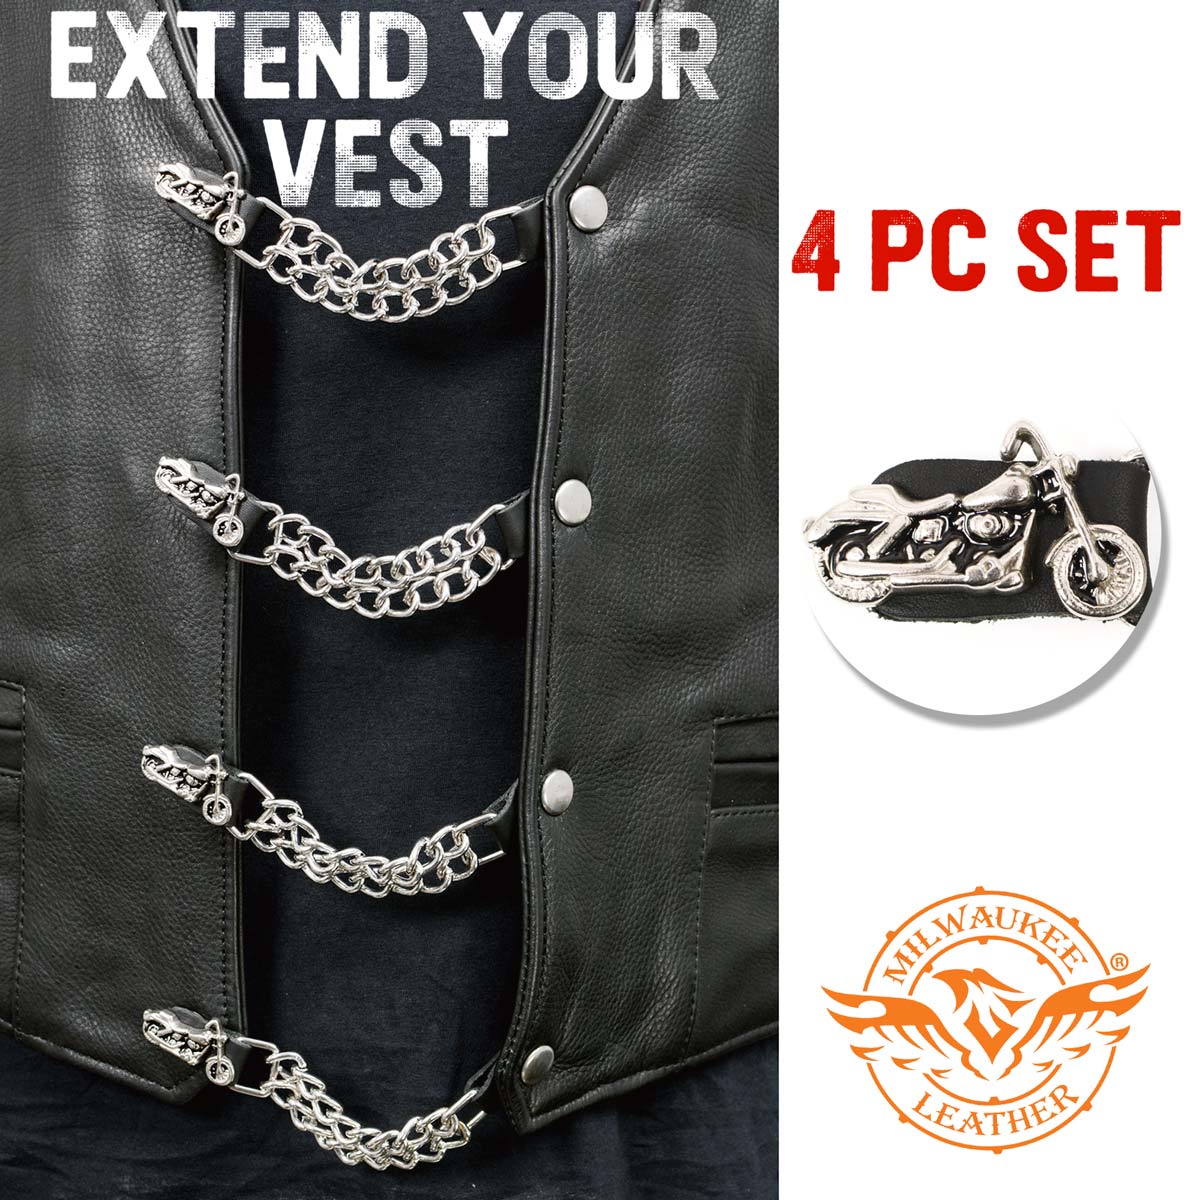 Milwaukee Leather Motorcycle Medallion Vest Extender - Double Chrome Chains Genuine Leather 6.5" Extension 4-PCS MLA6006SET